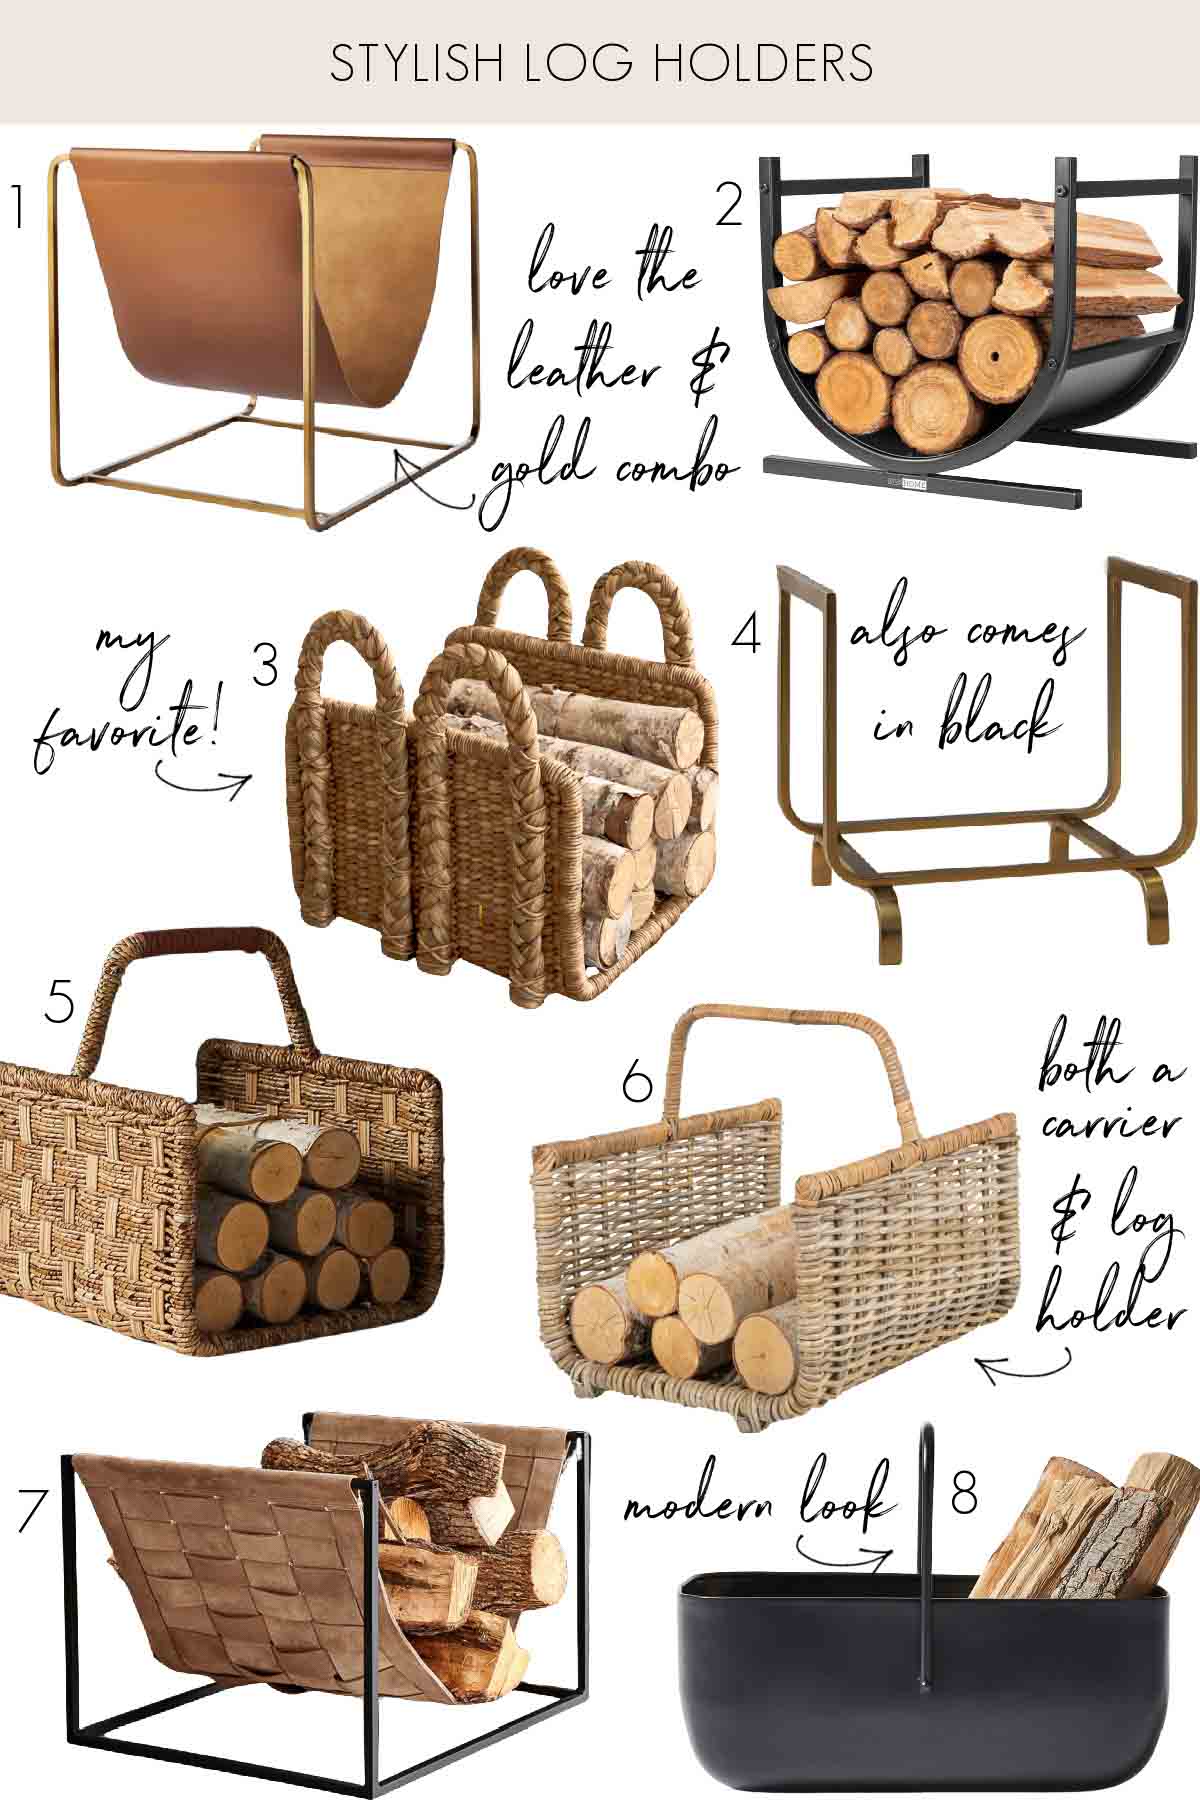 Eight stylish log holders